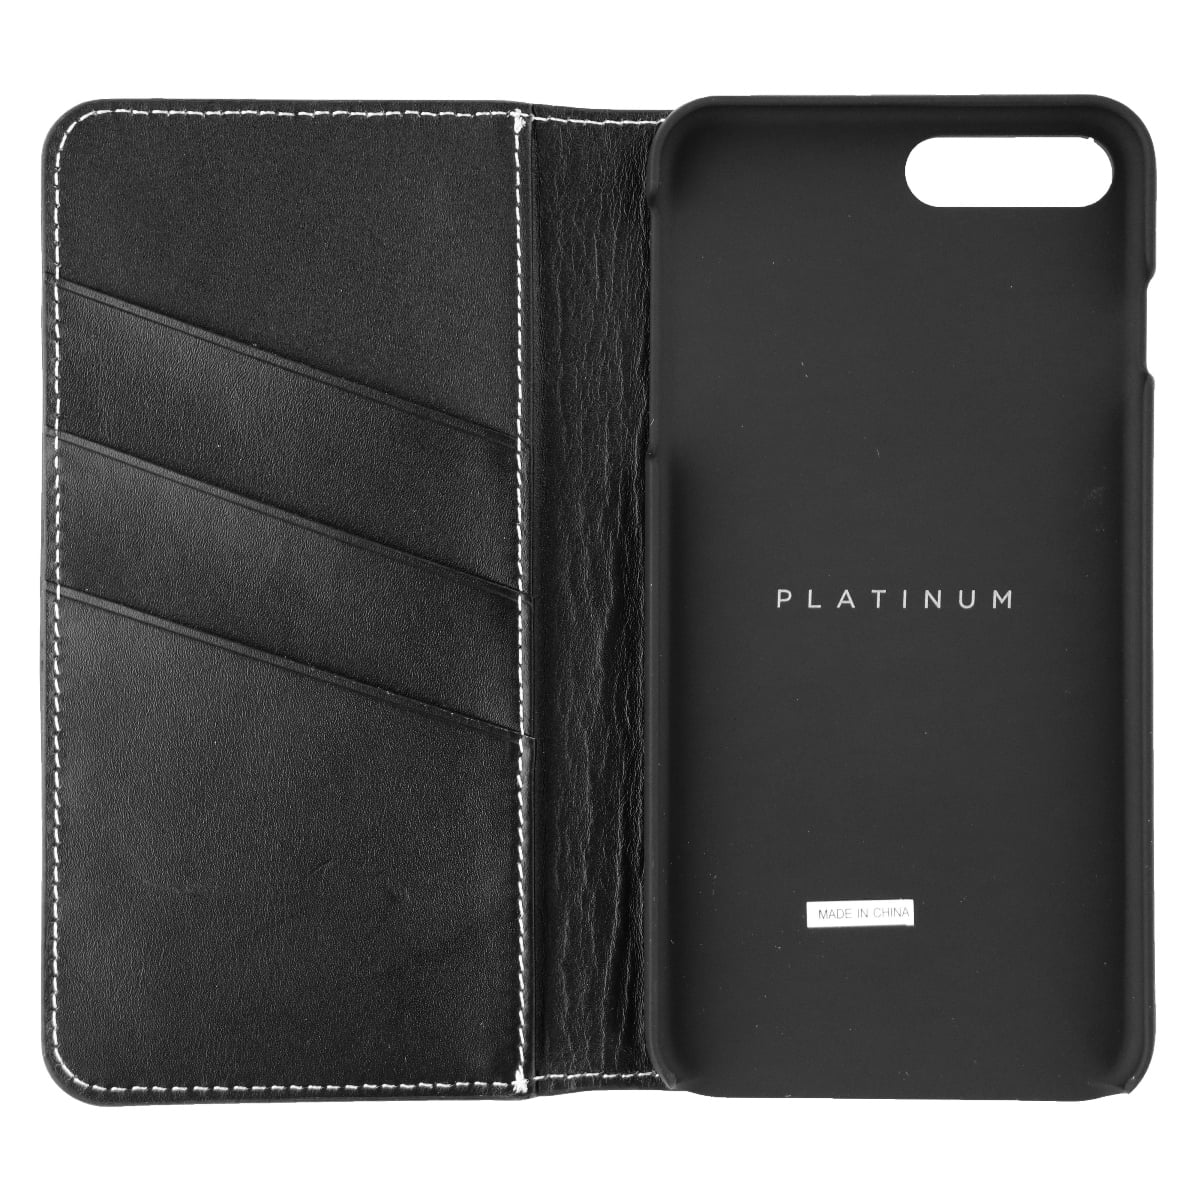 Platinum Leather Folio Wallet Case for Apple iPhone 8 Plus 7 Plus - Black - www.bagssaleusa.com/product-category/shoes/